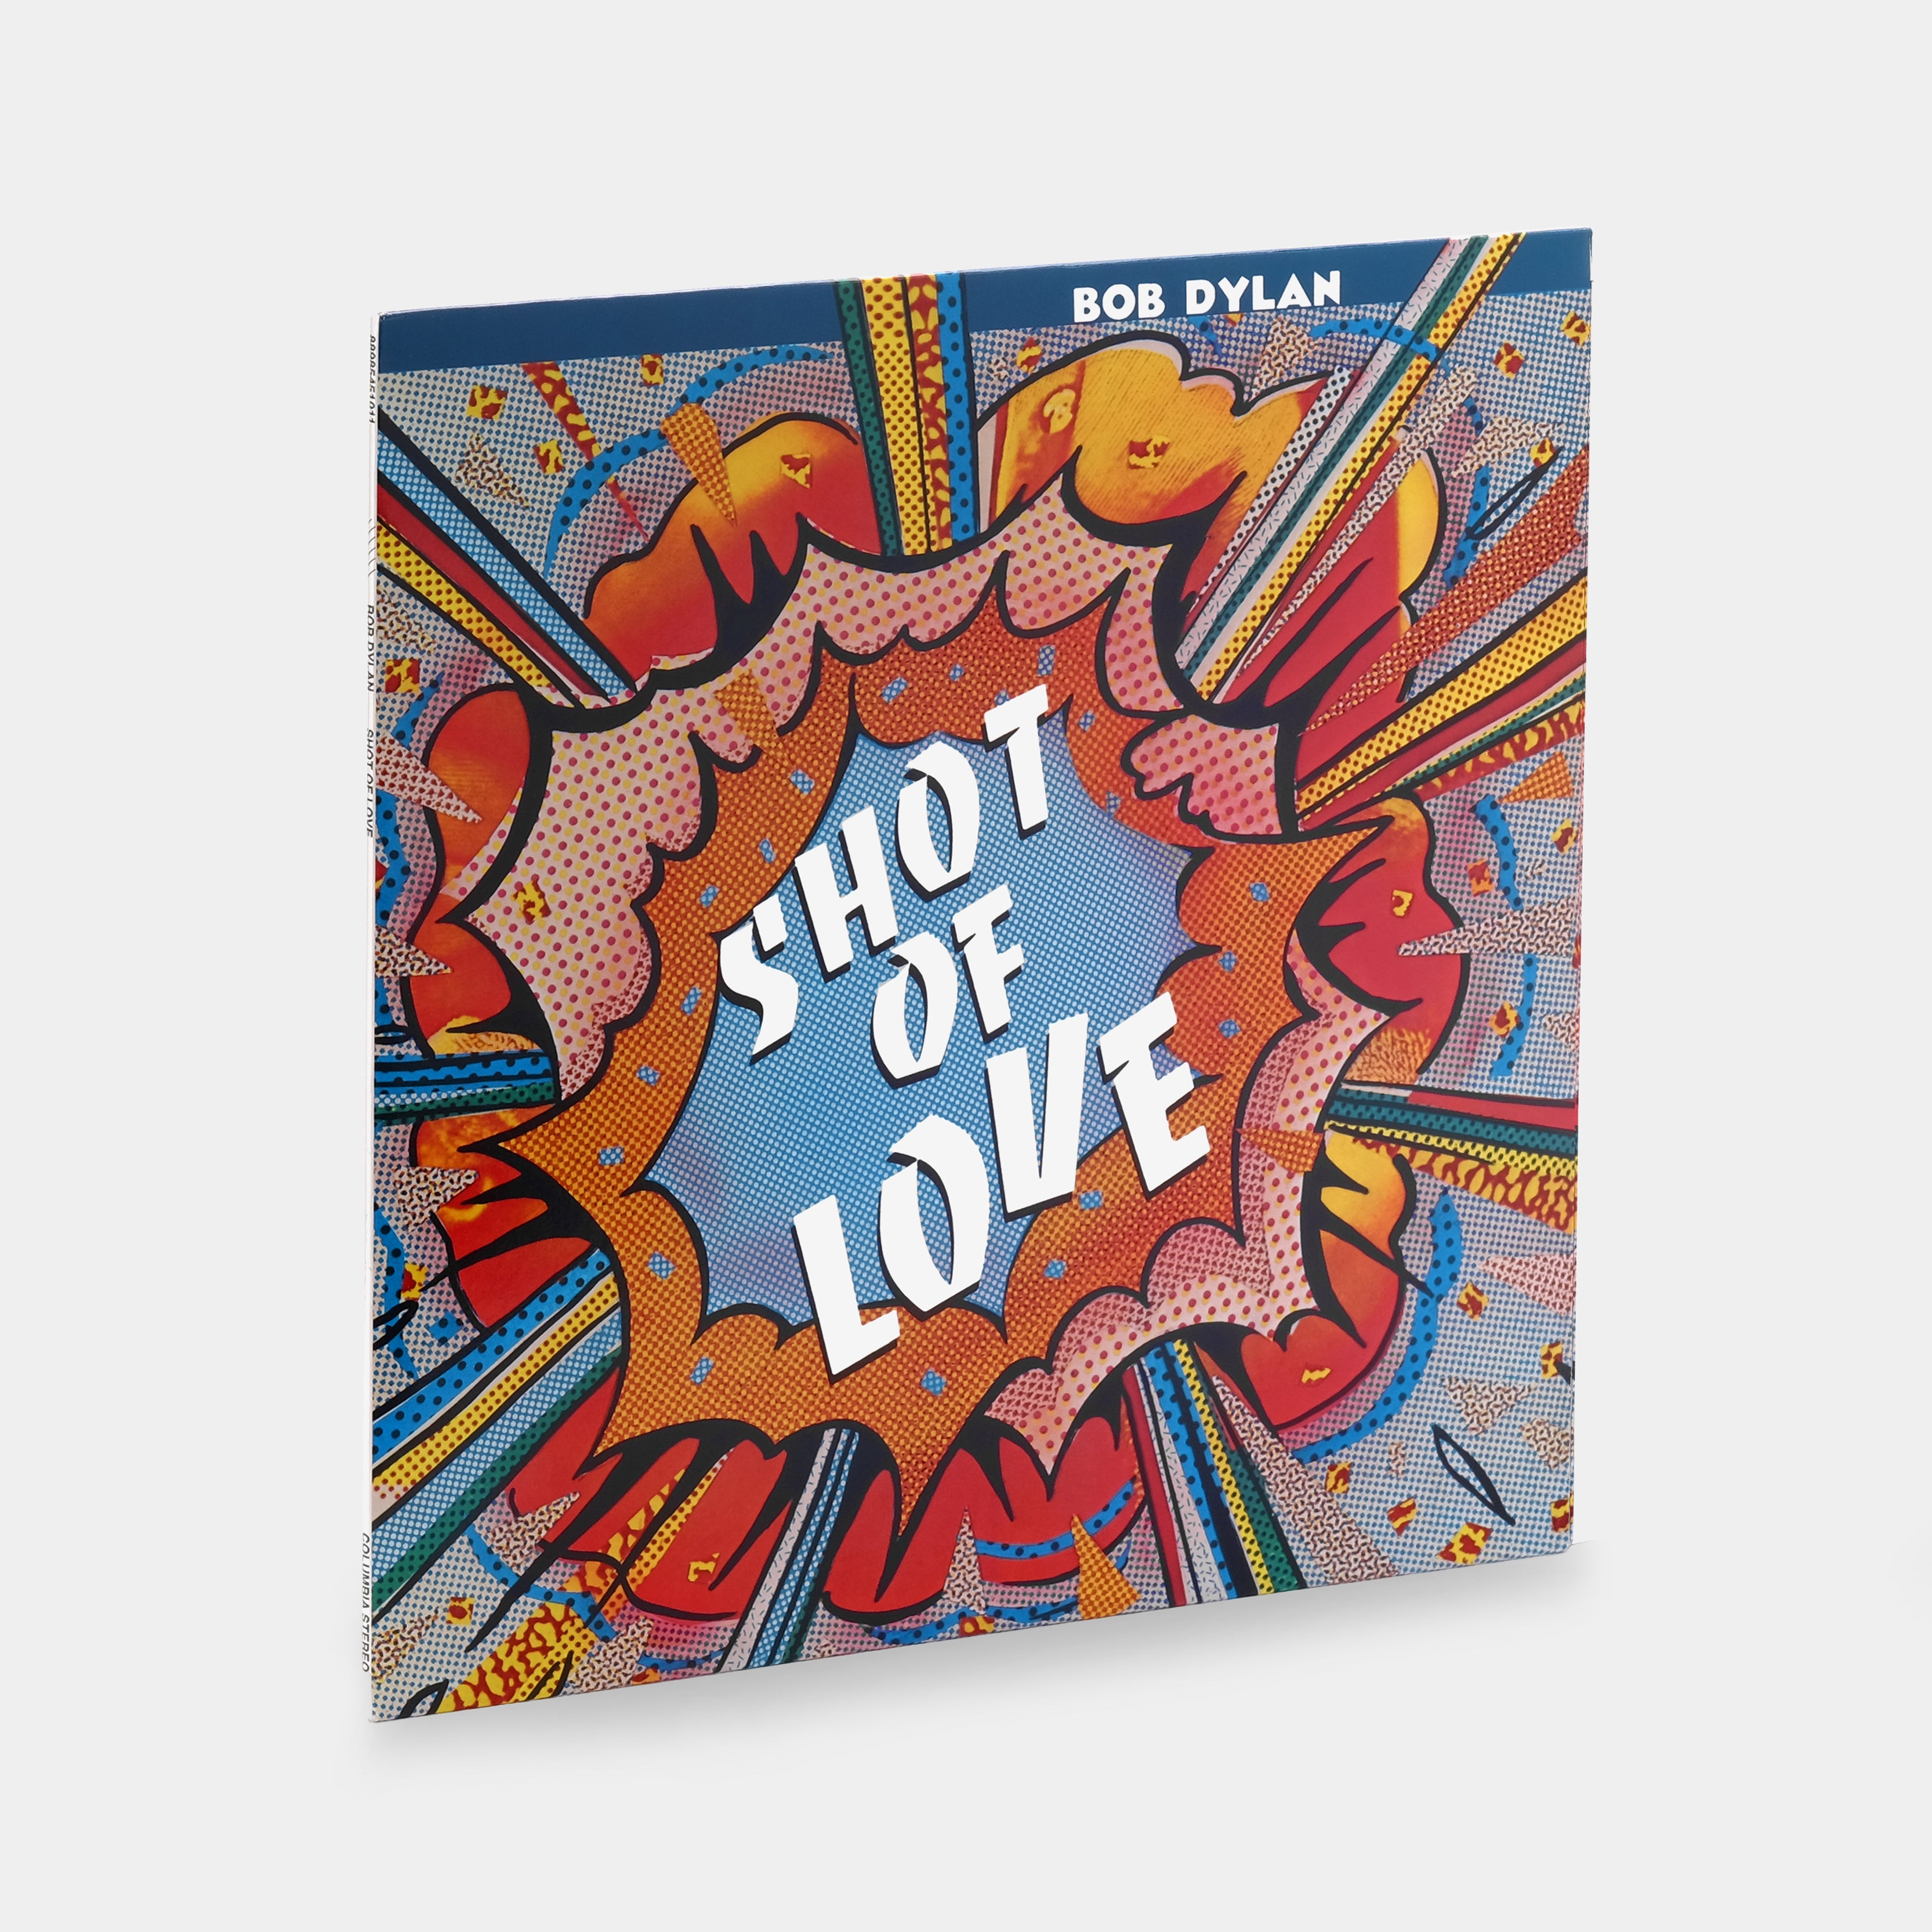 Bob Dylan - Shot of Love LP Vinyl Record